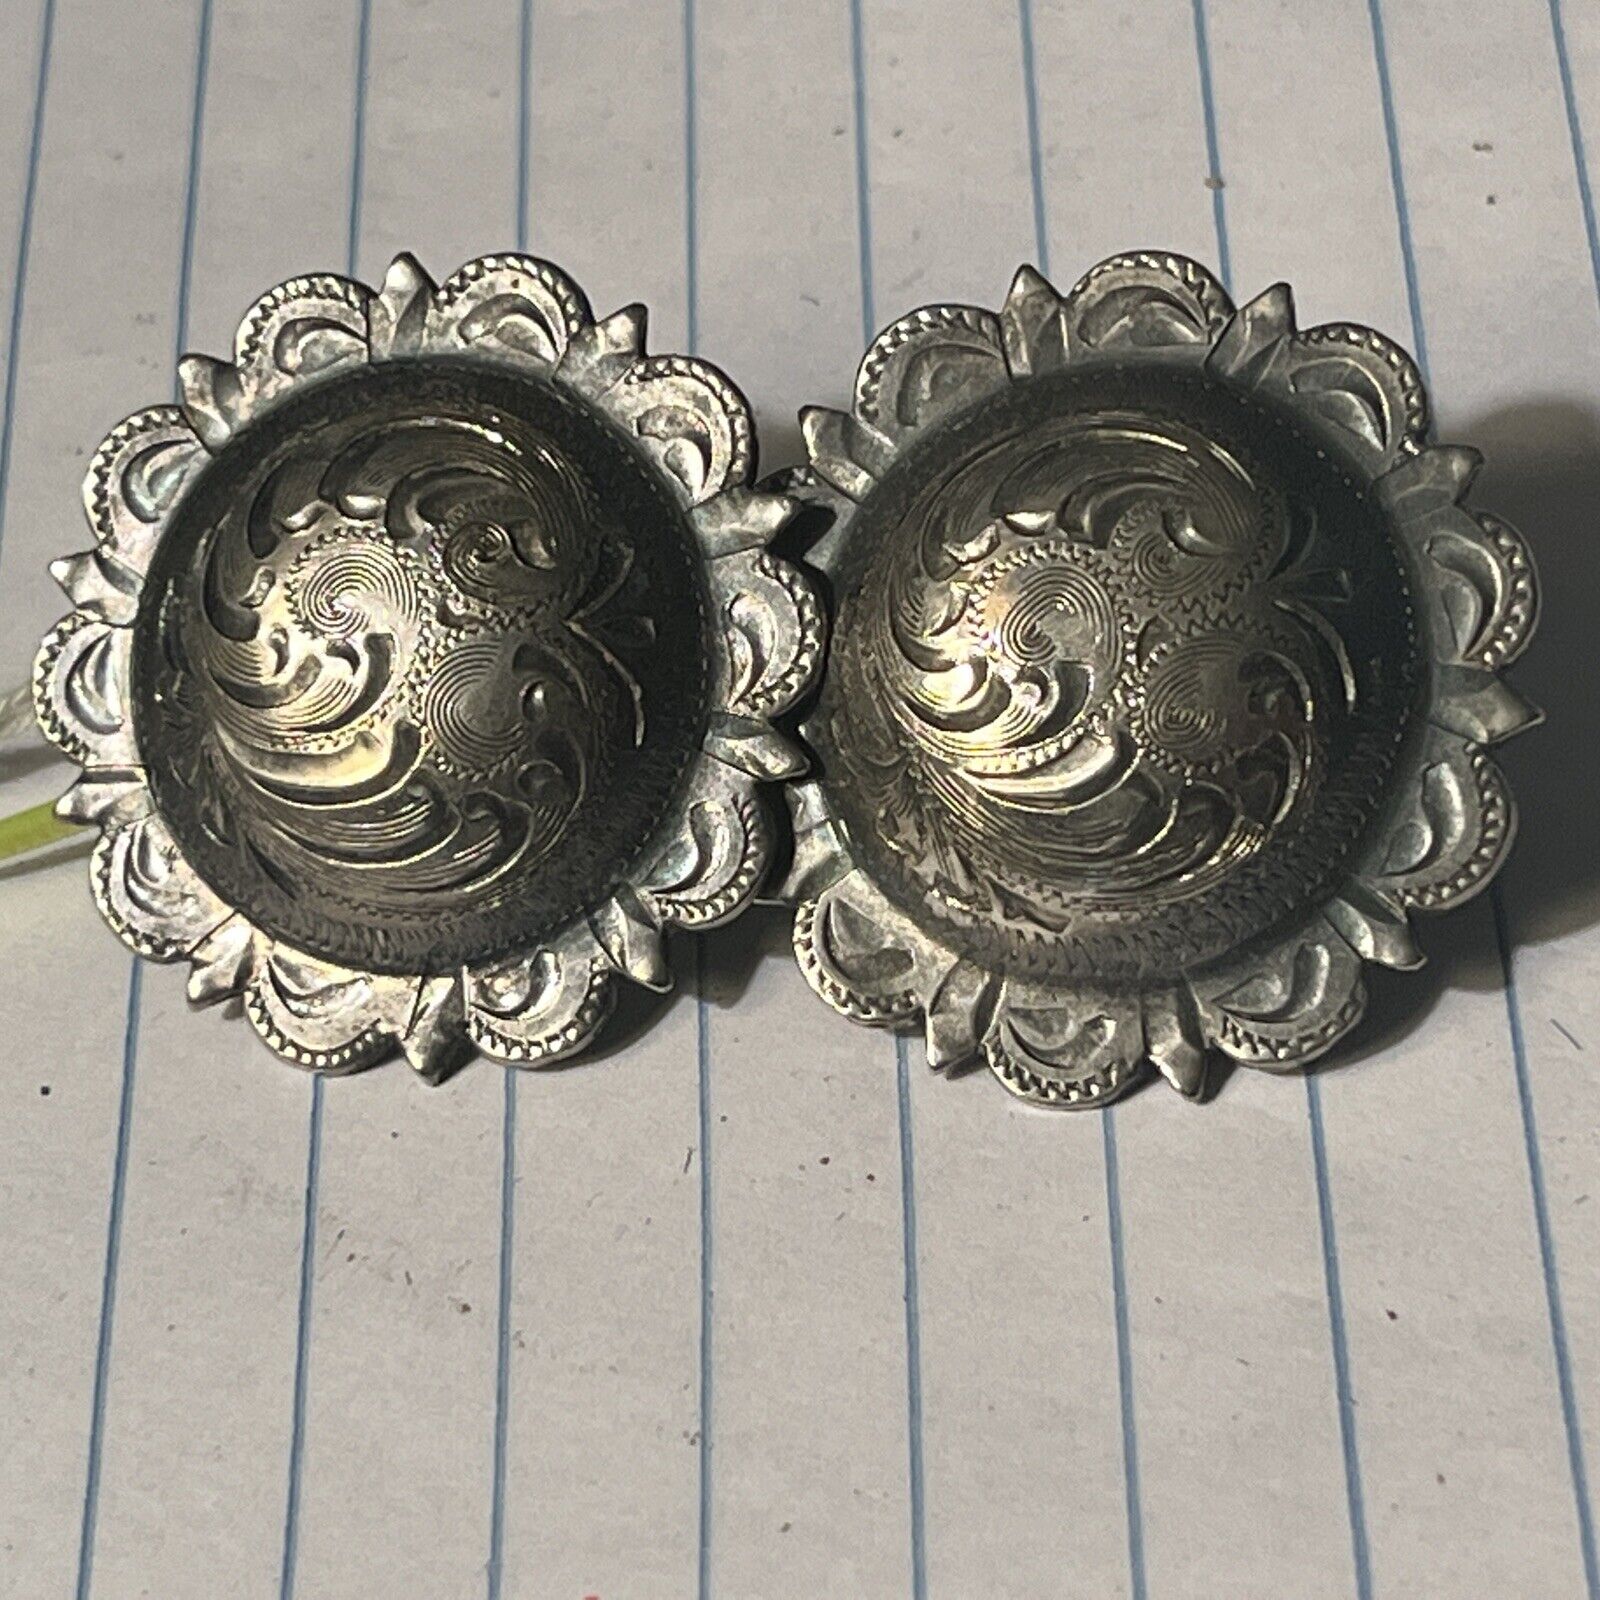 1.5” sterling silver bridle loop conchos